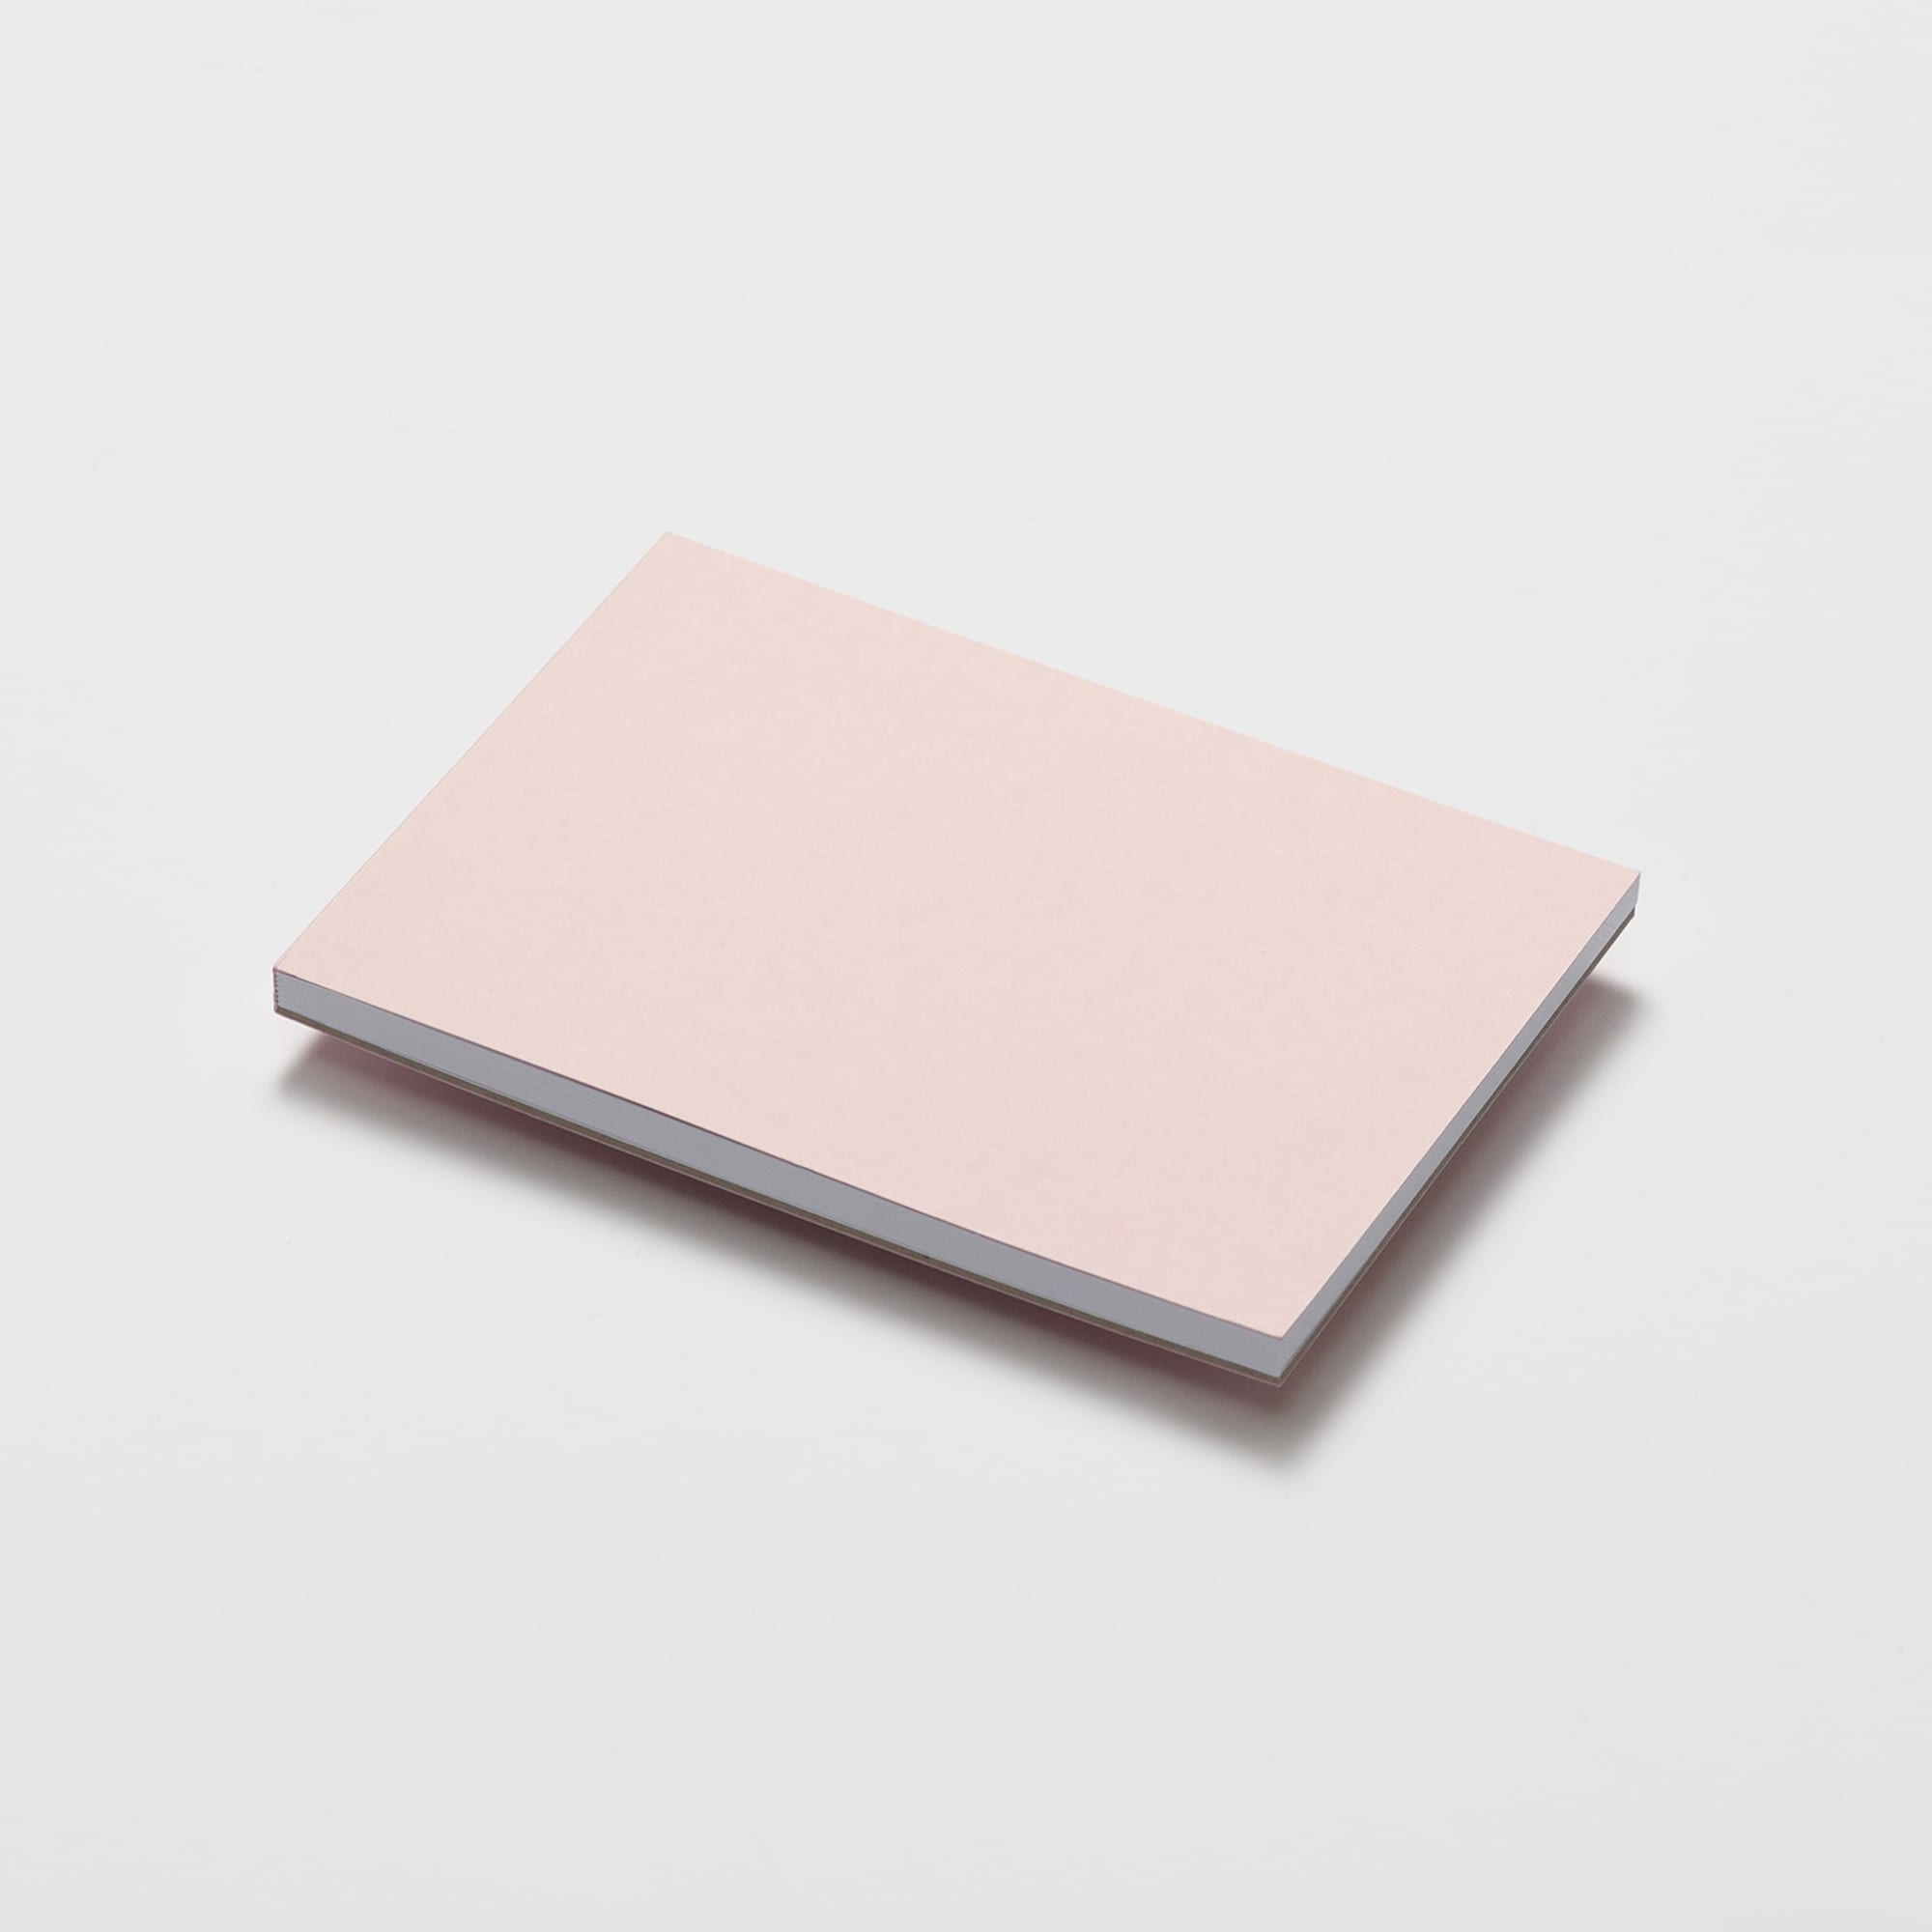  - Sketchpad Falafel для маркеров и графики А5 Pale Pink